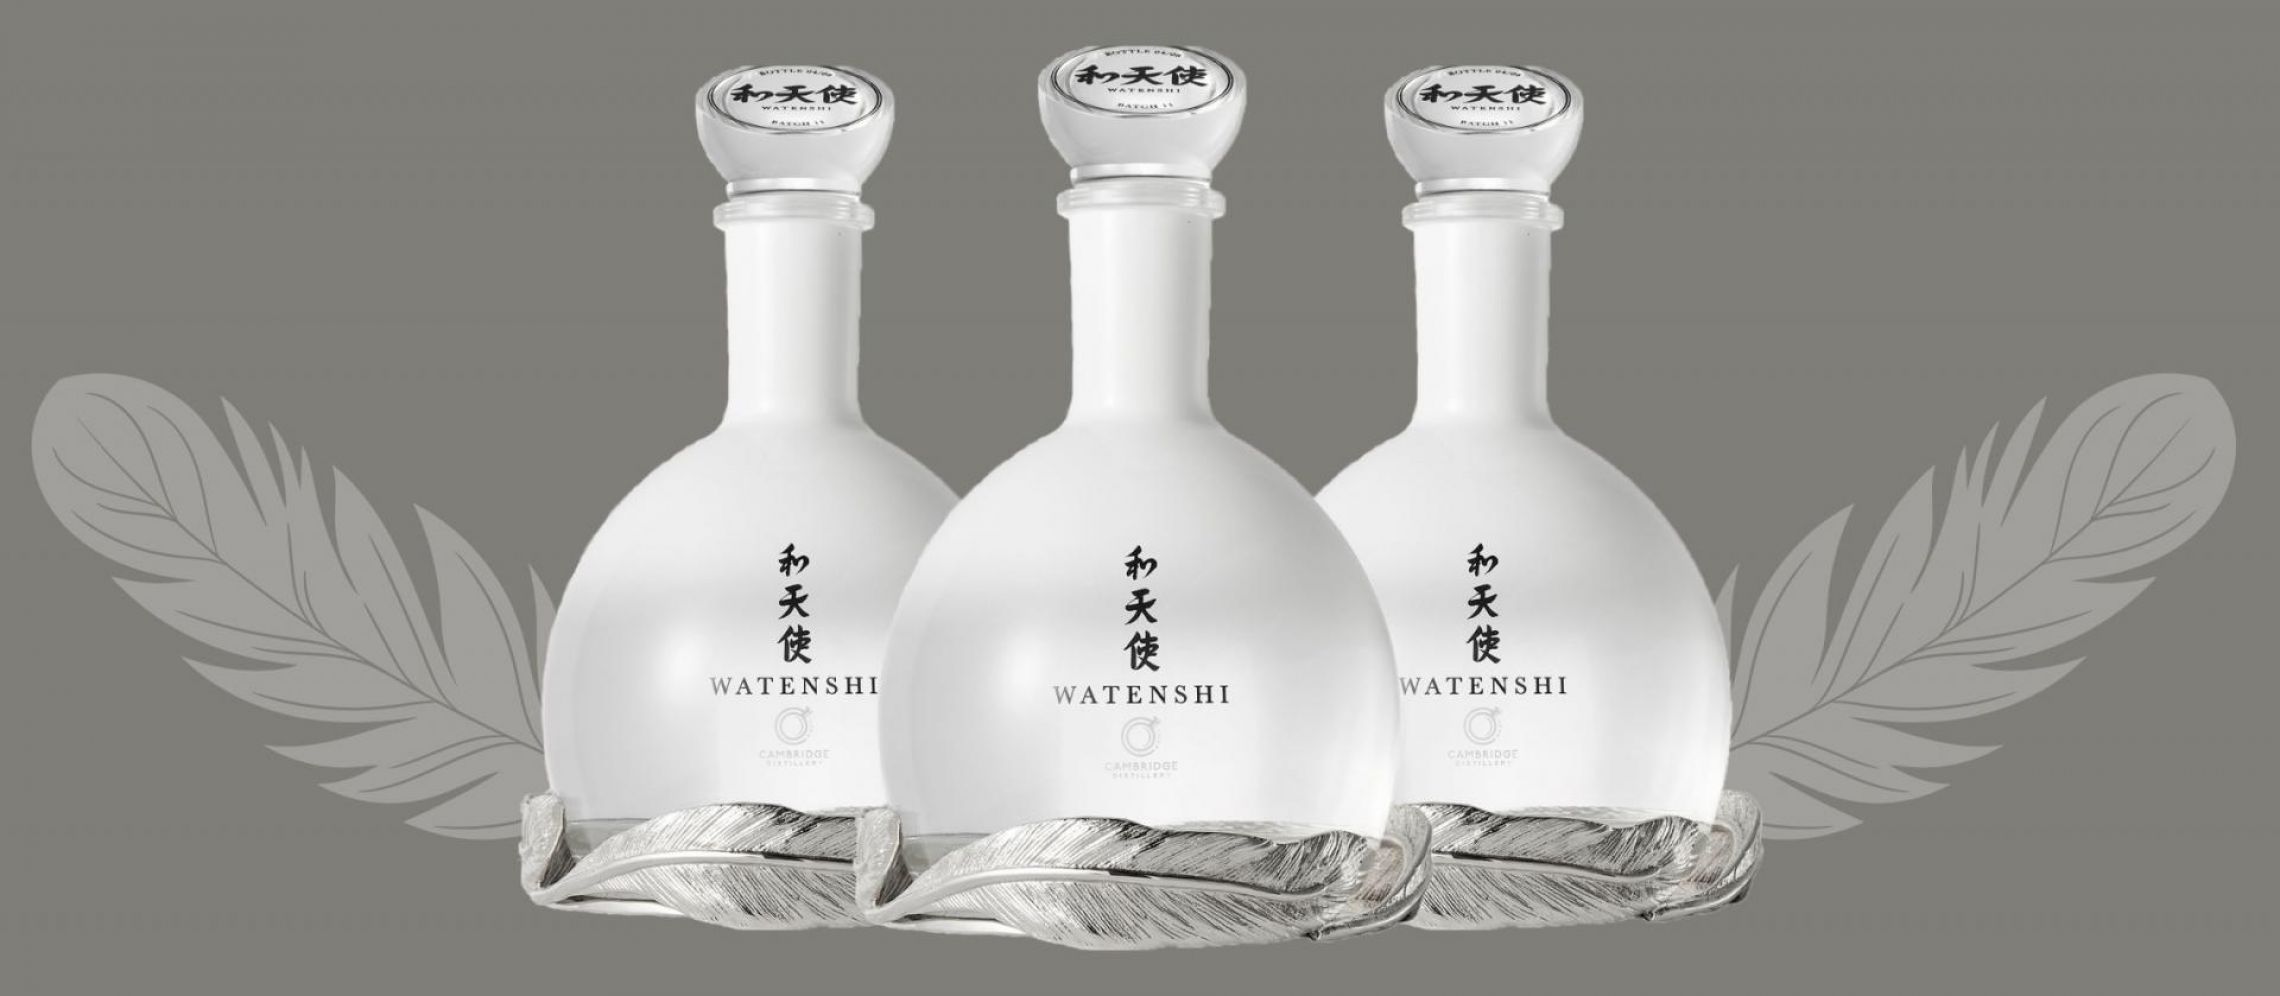 The Exquisite Watenshi Gin: The Pinnacle of Premium Gin